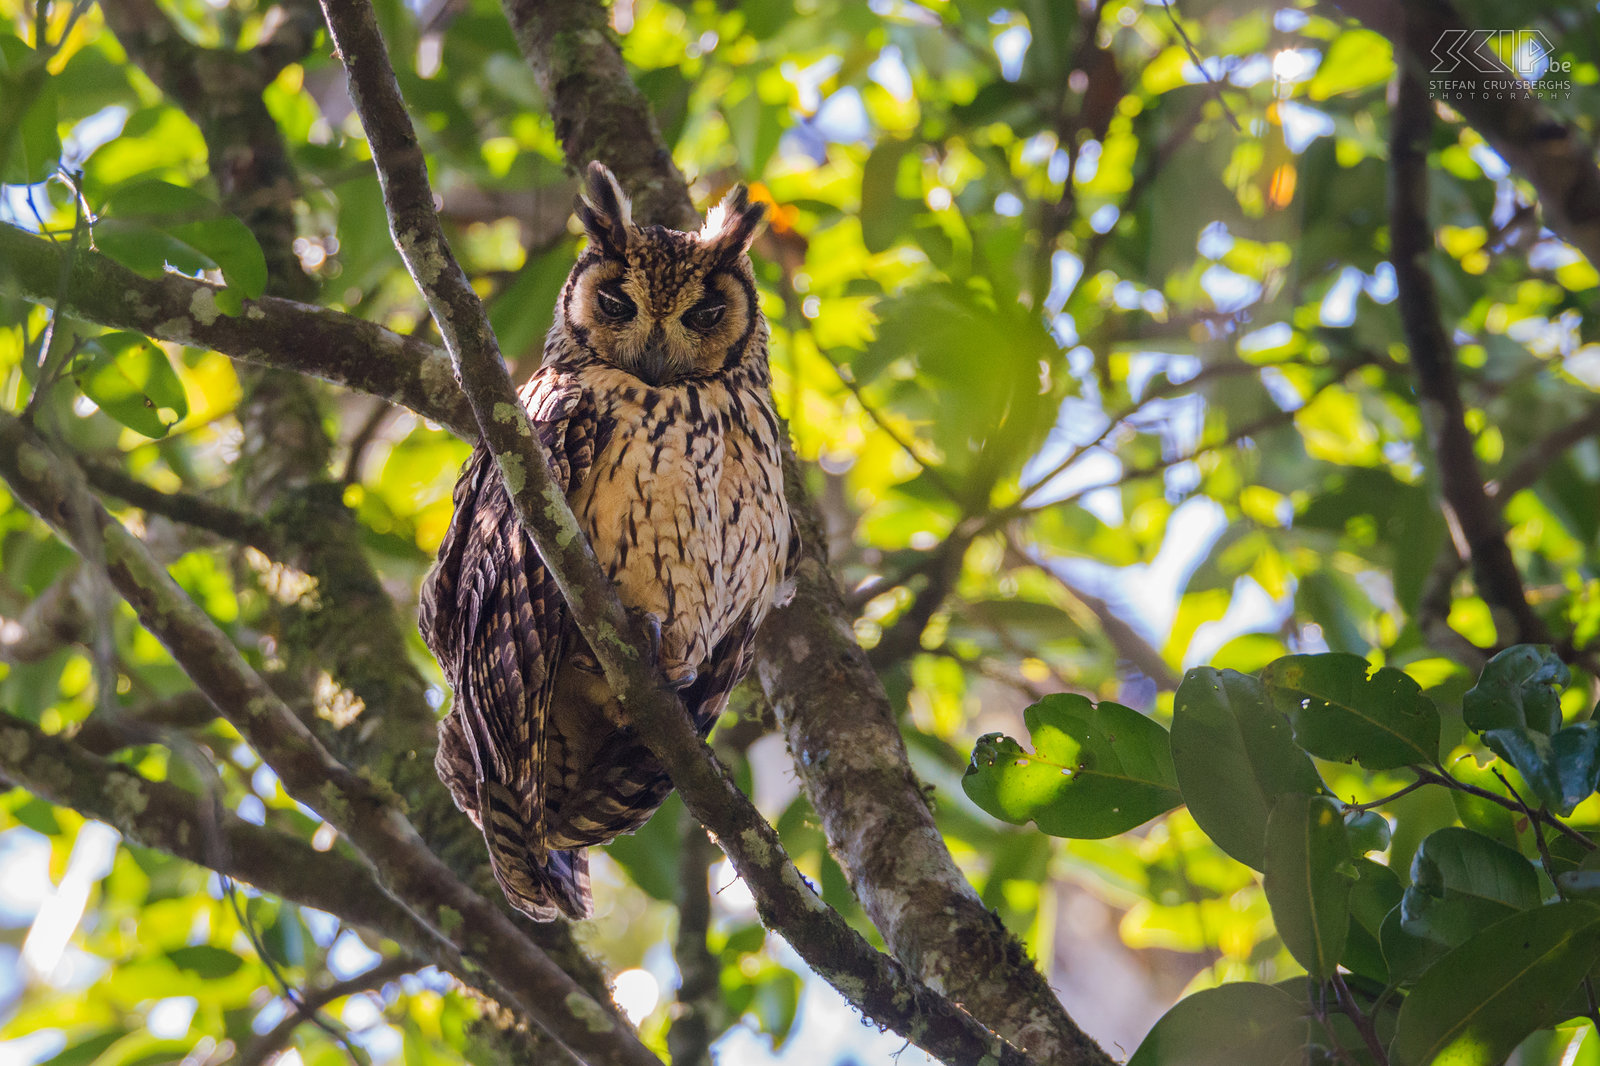 Madagascar long-eared owl photo